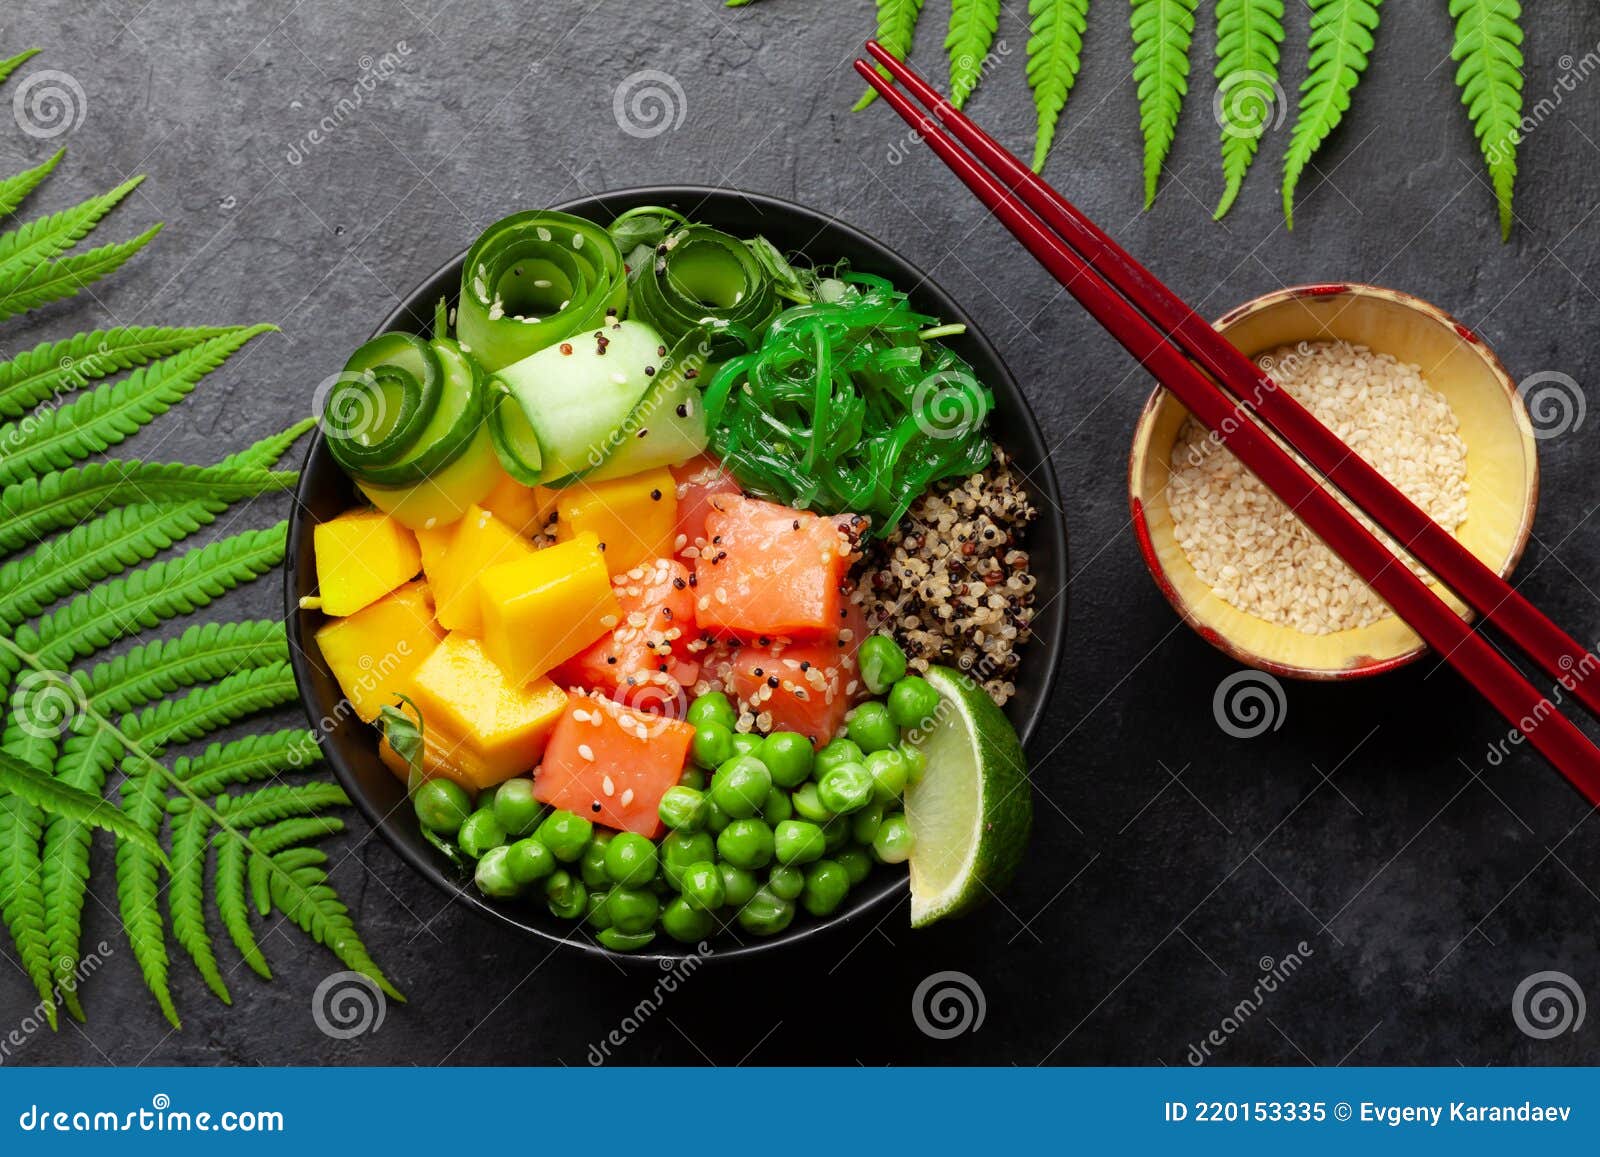 poke bowl with salmon, cucumber and mango